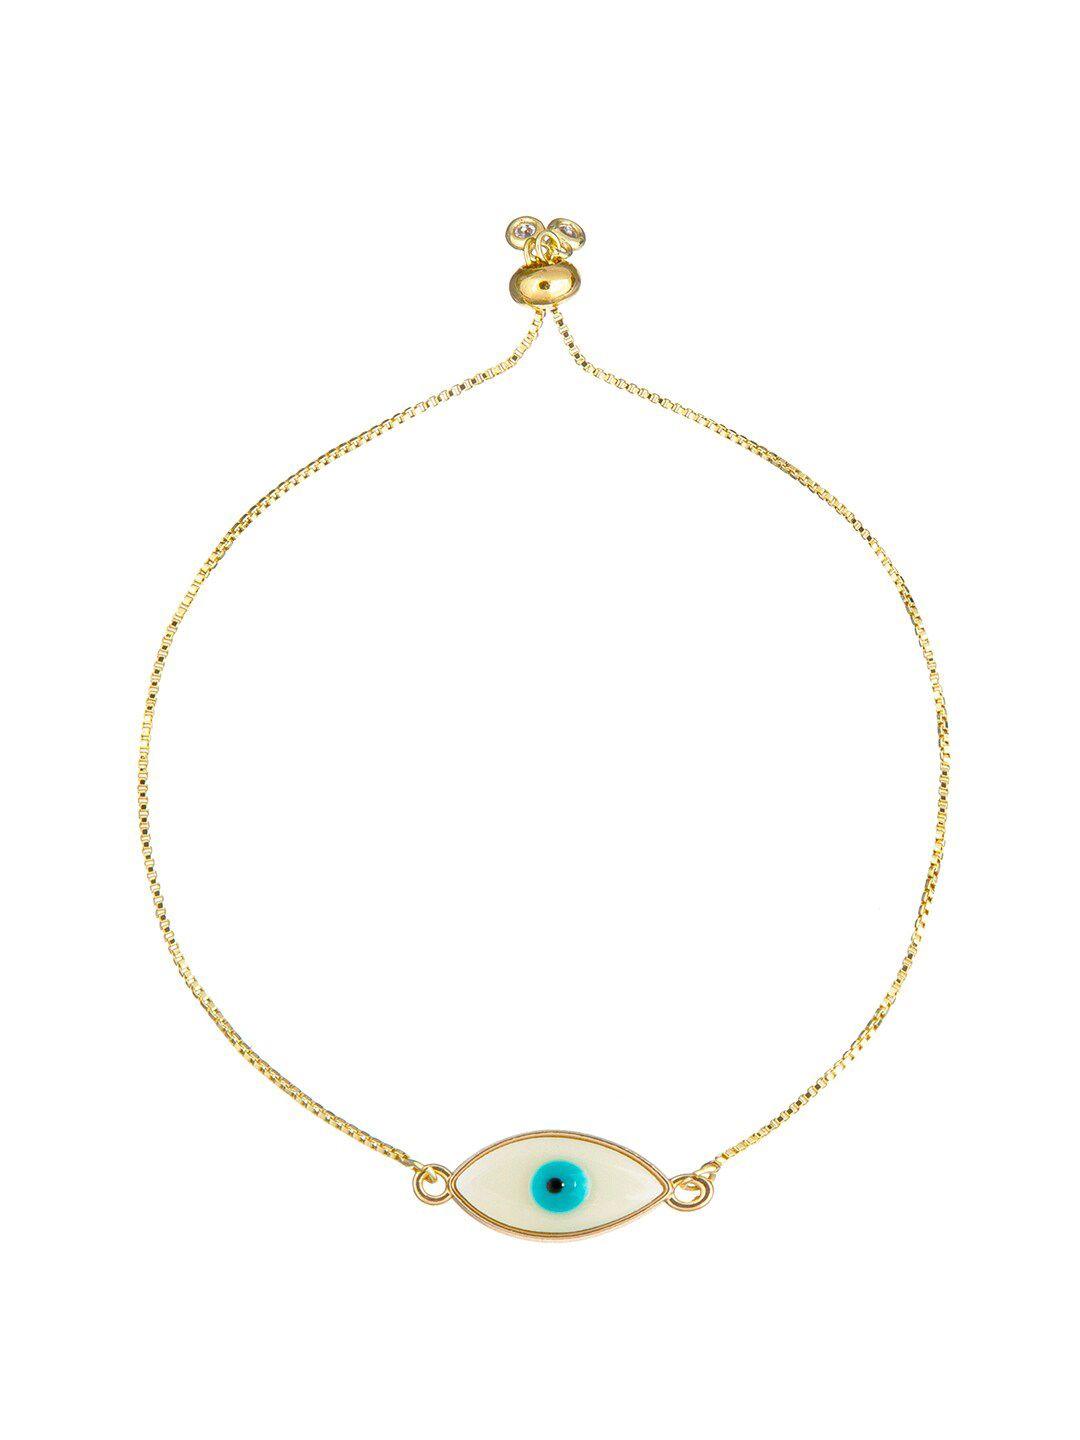 shining jewel - by shivansh gold-plated brass evil eye wraparound bracelet